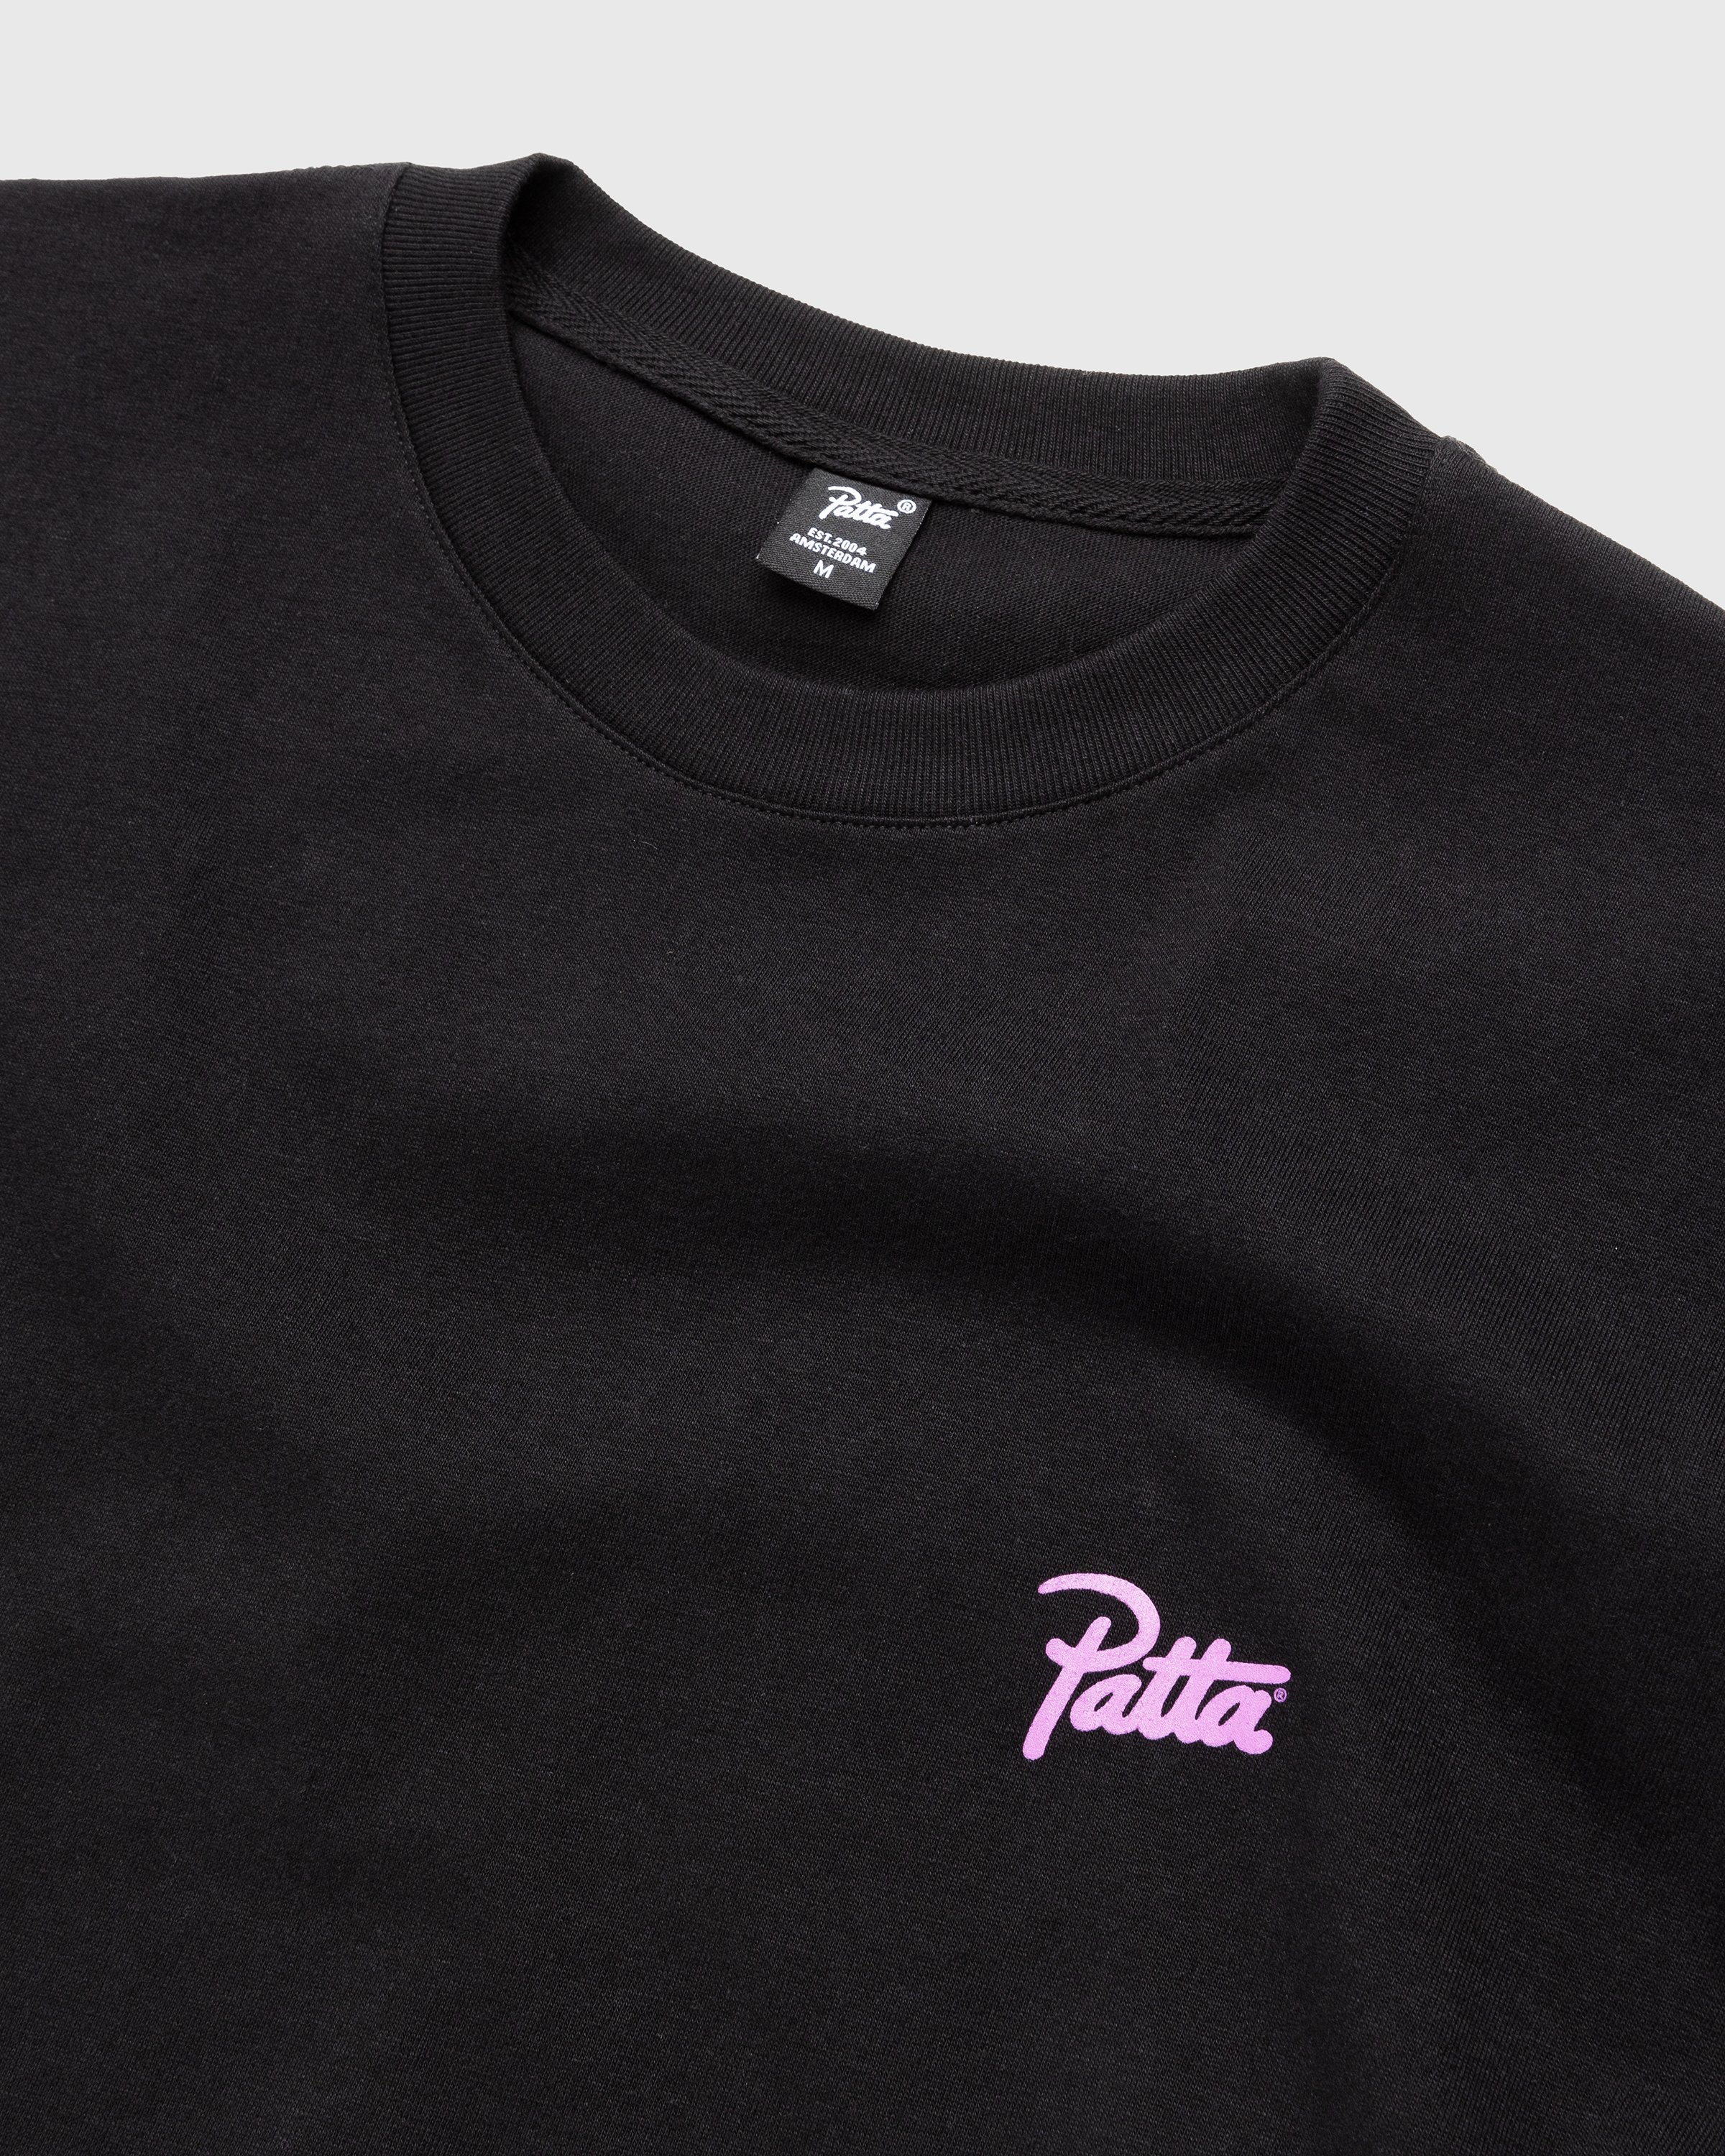 Patta - We Gotta Rhyme T-Shirt Black - Clothing - Black - Image 3